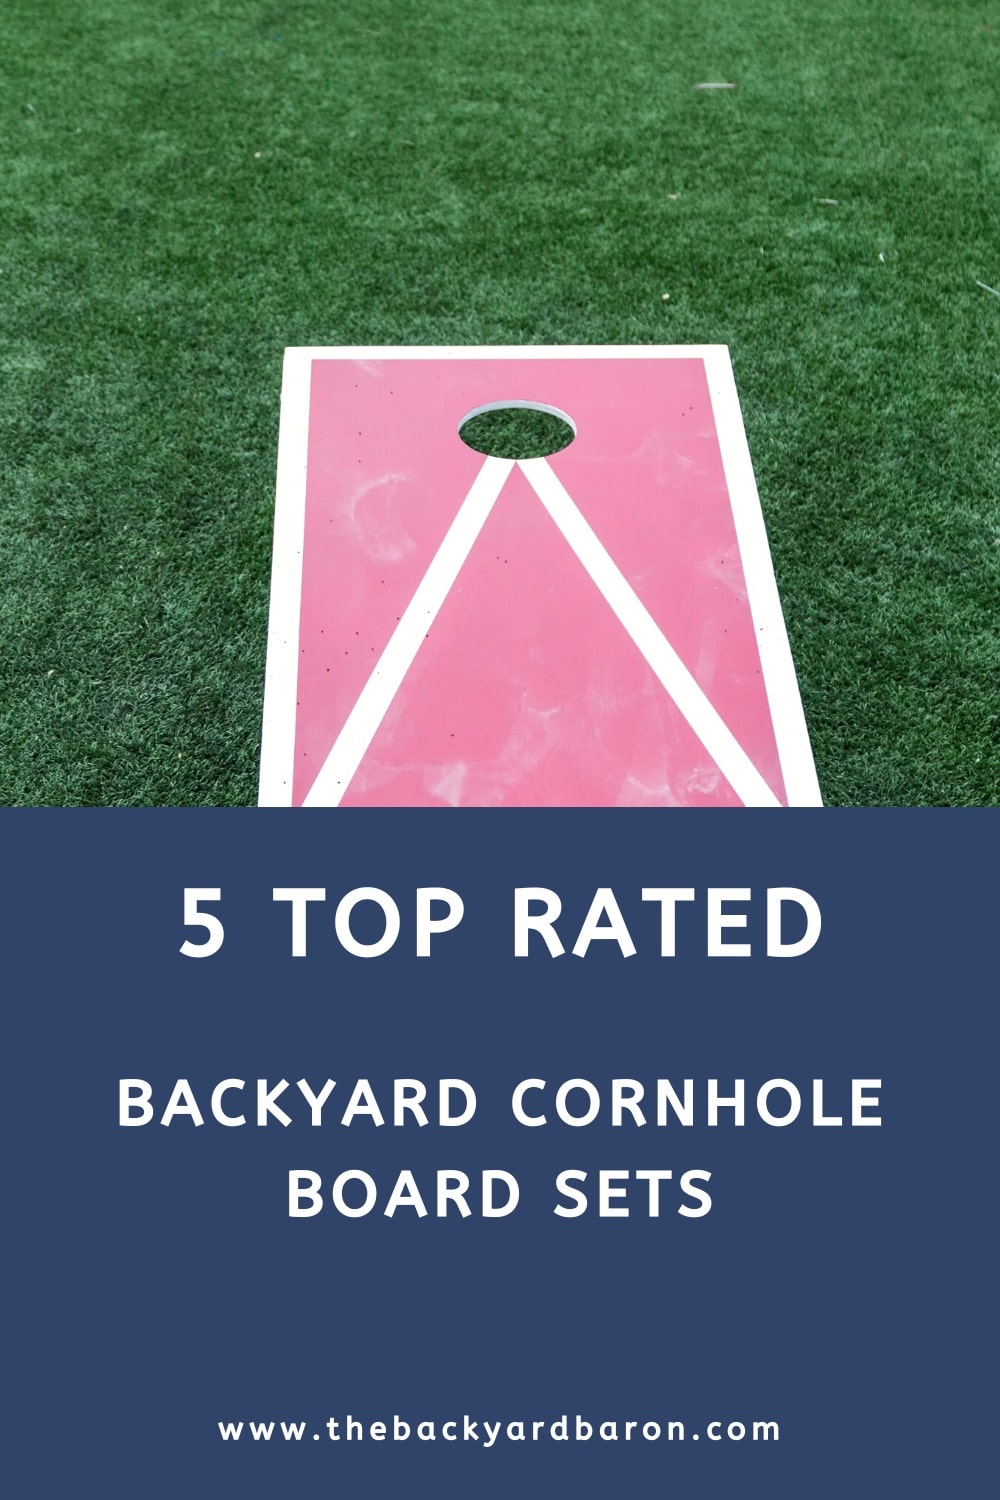 5 Top rated backyard cornhole boards